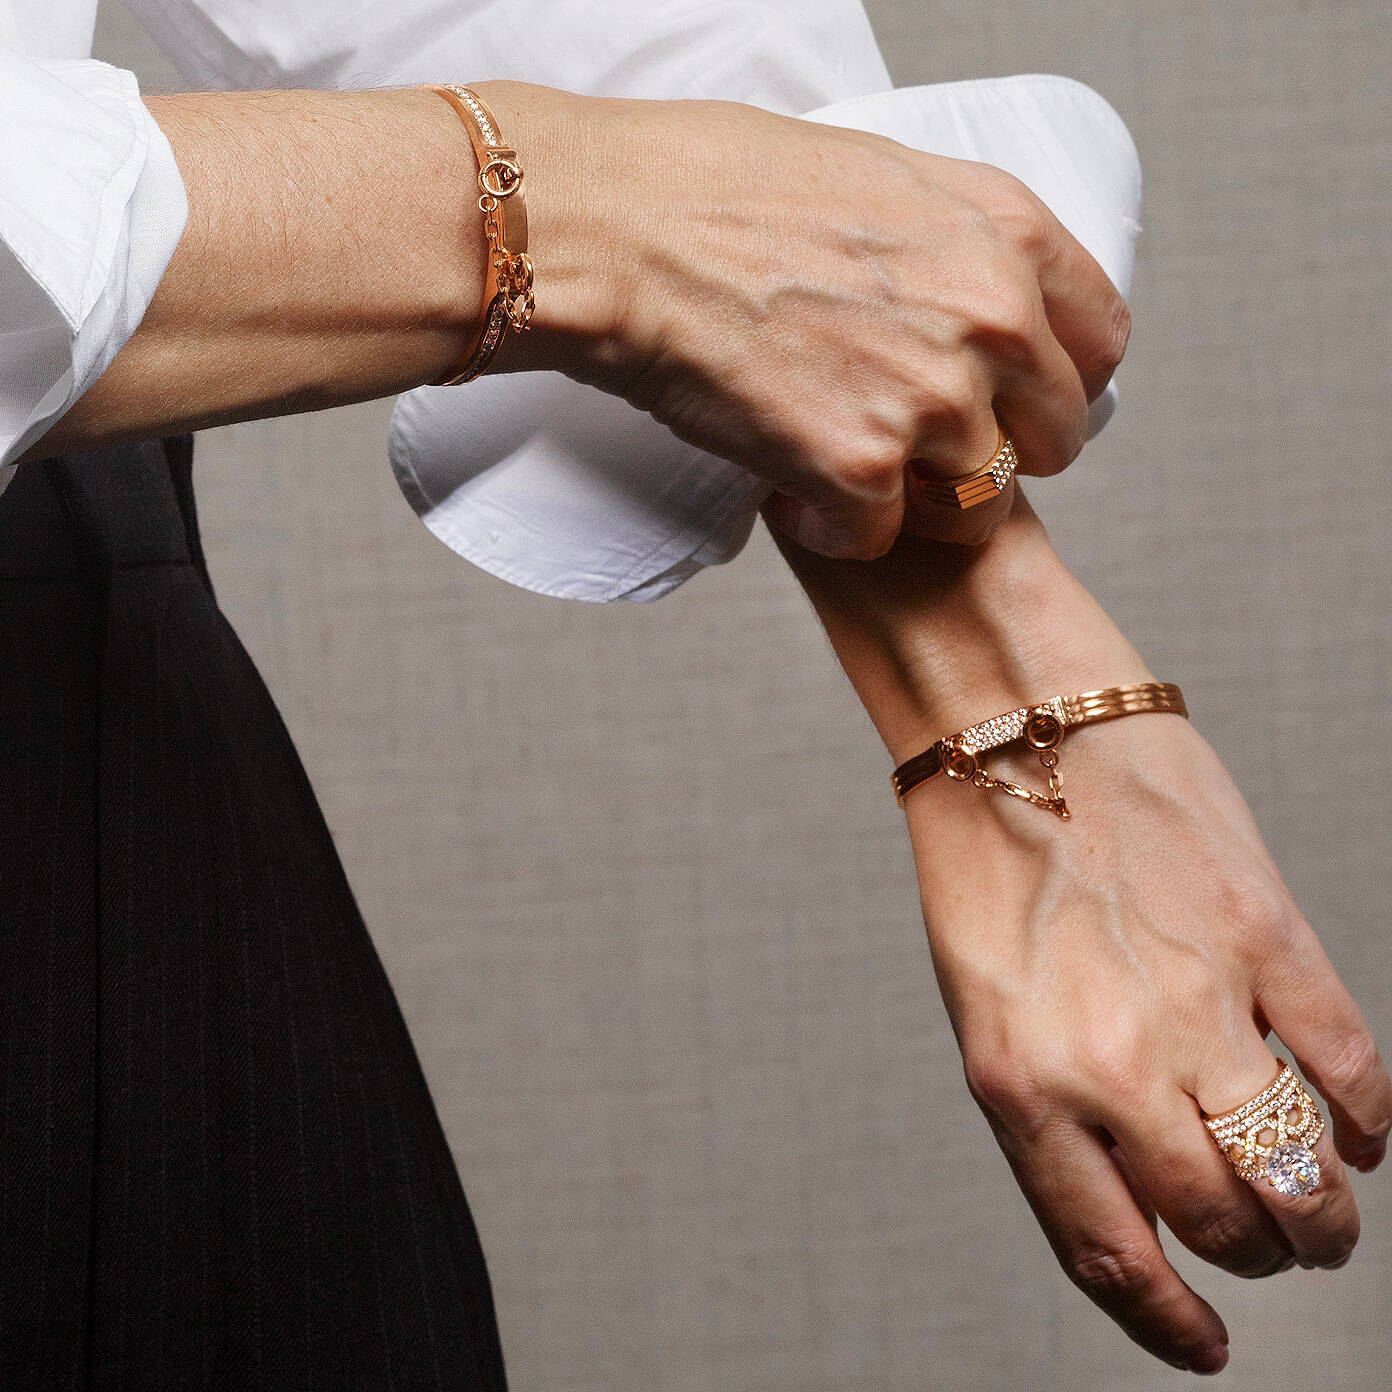 Cartier Love bracelet alternatives